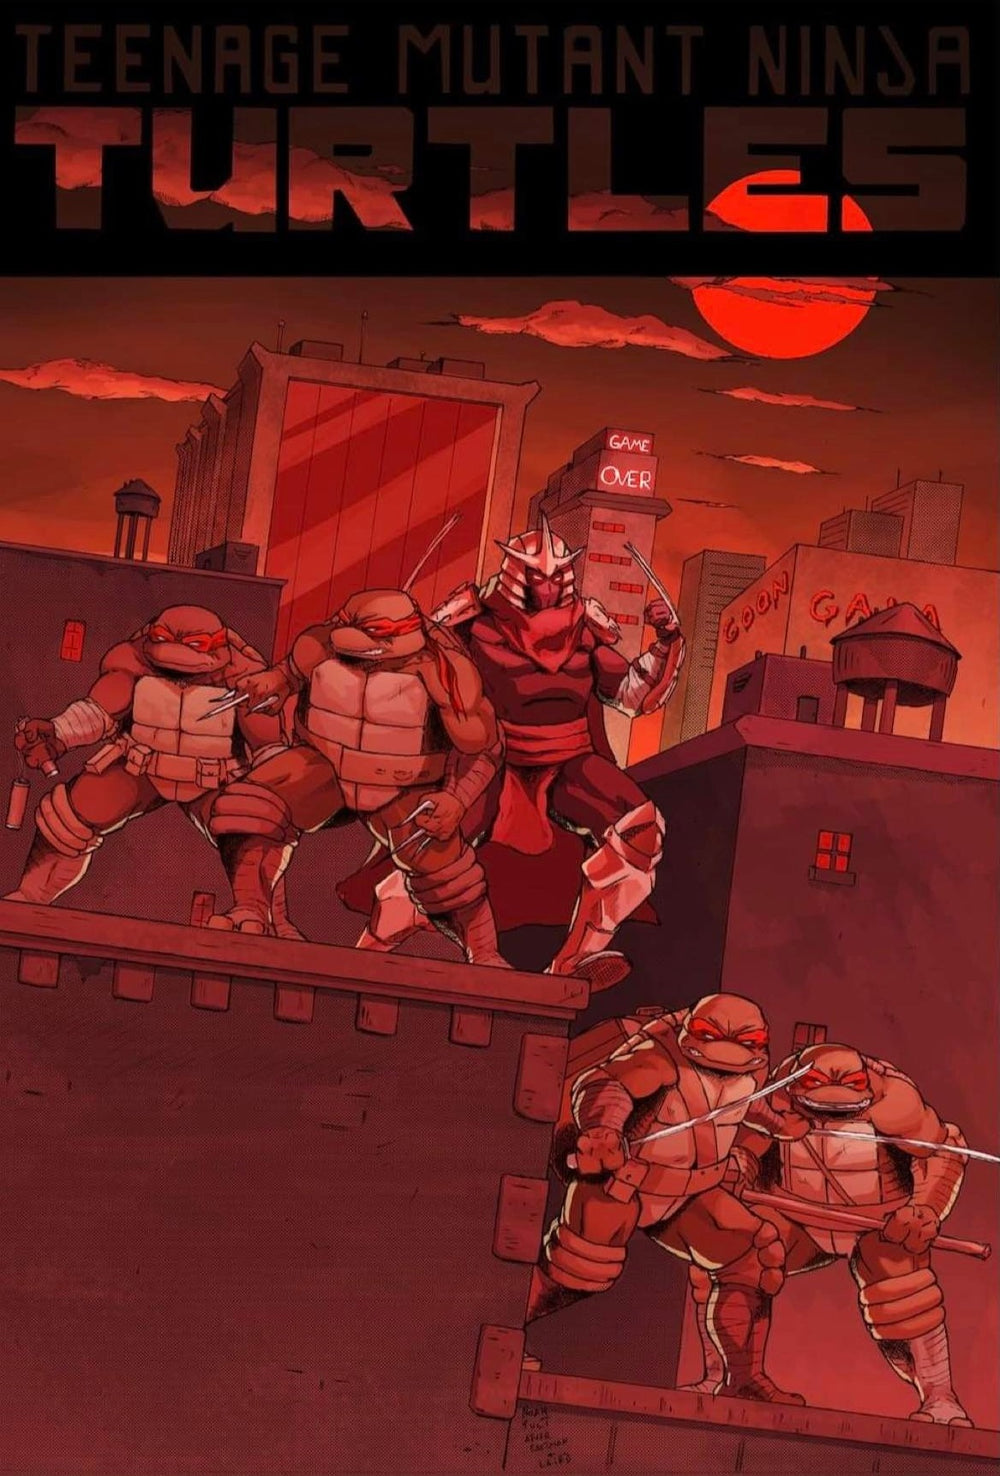 Teenage Mutant Ninja Turtles: ARMAGEDDON GAME #1 - NOAH SULT TMNT #1 HOMAGE EXCLUSIVE! (Ltd to Only 1000 Copies)